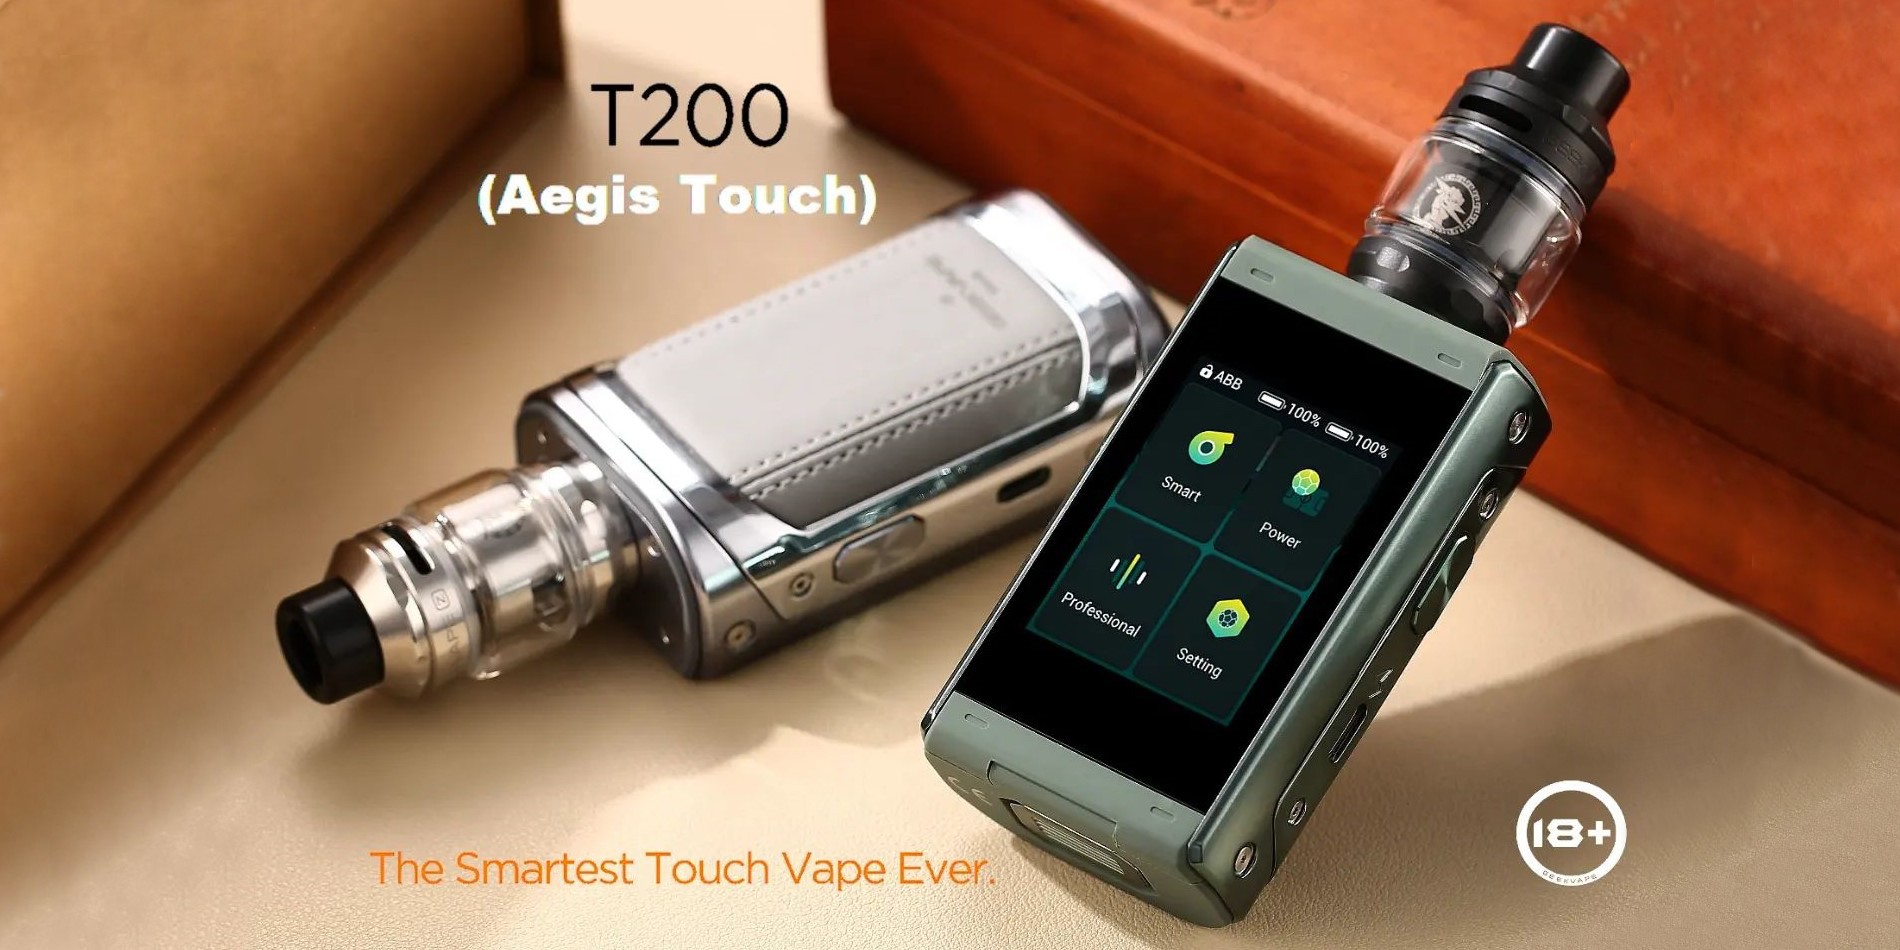 Geekvape T200 (Aegis Touch)